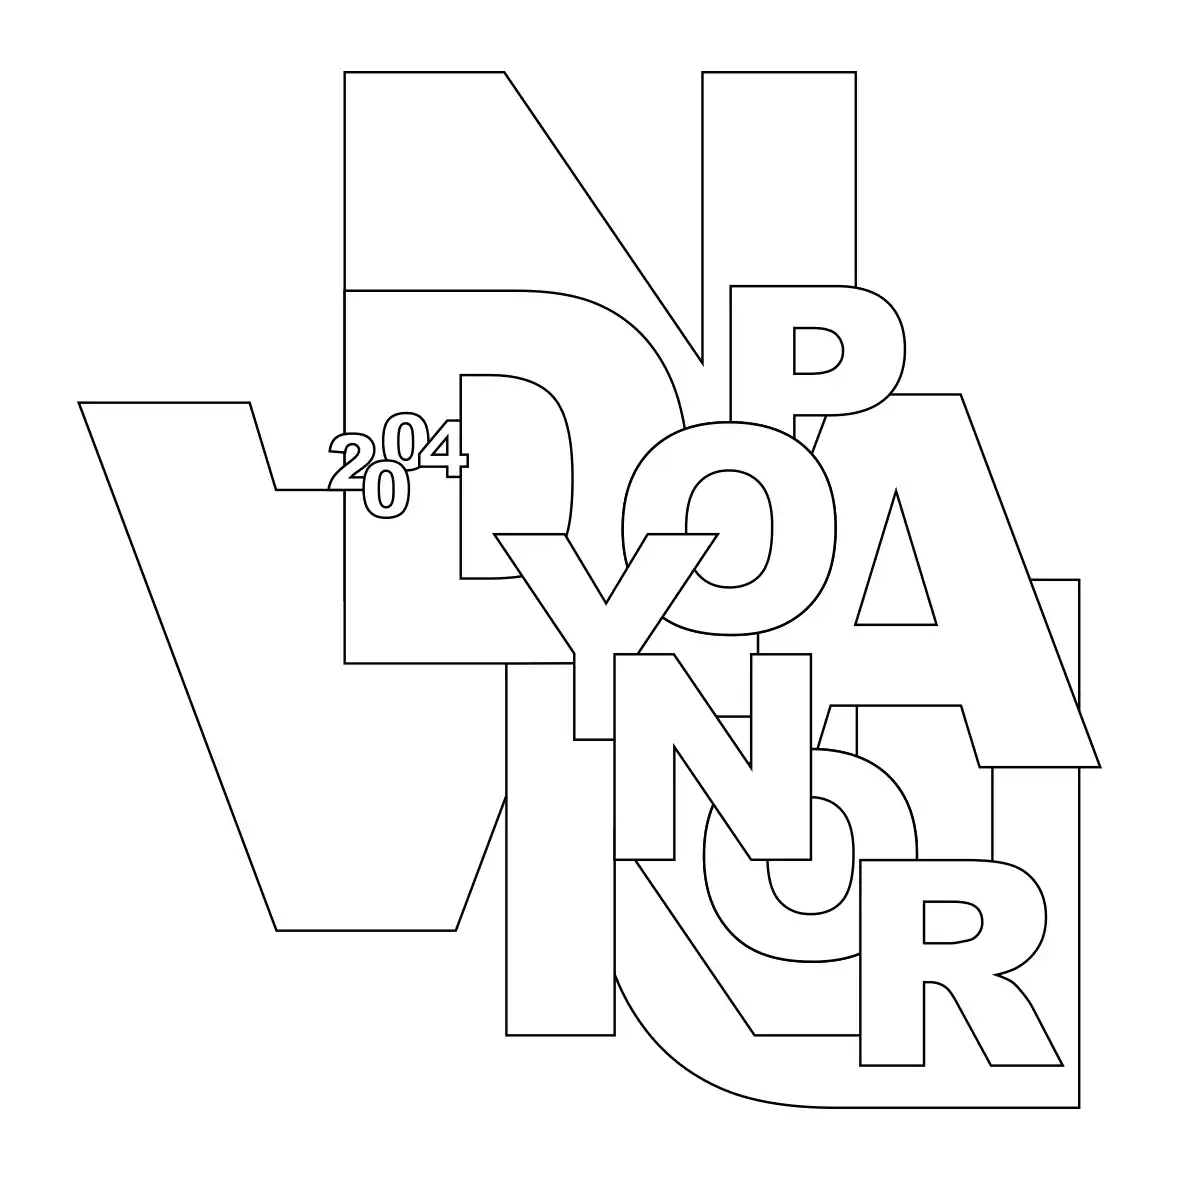 Dan Poynor Typographic Illustration 2004 Black and White